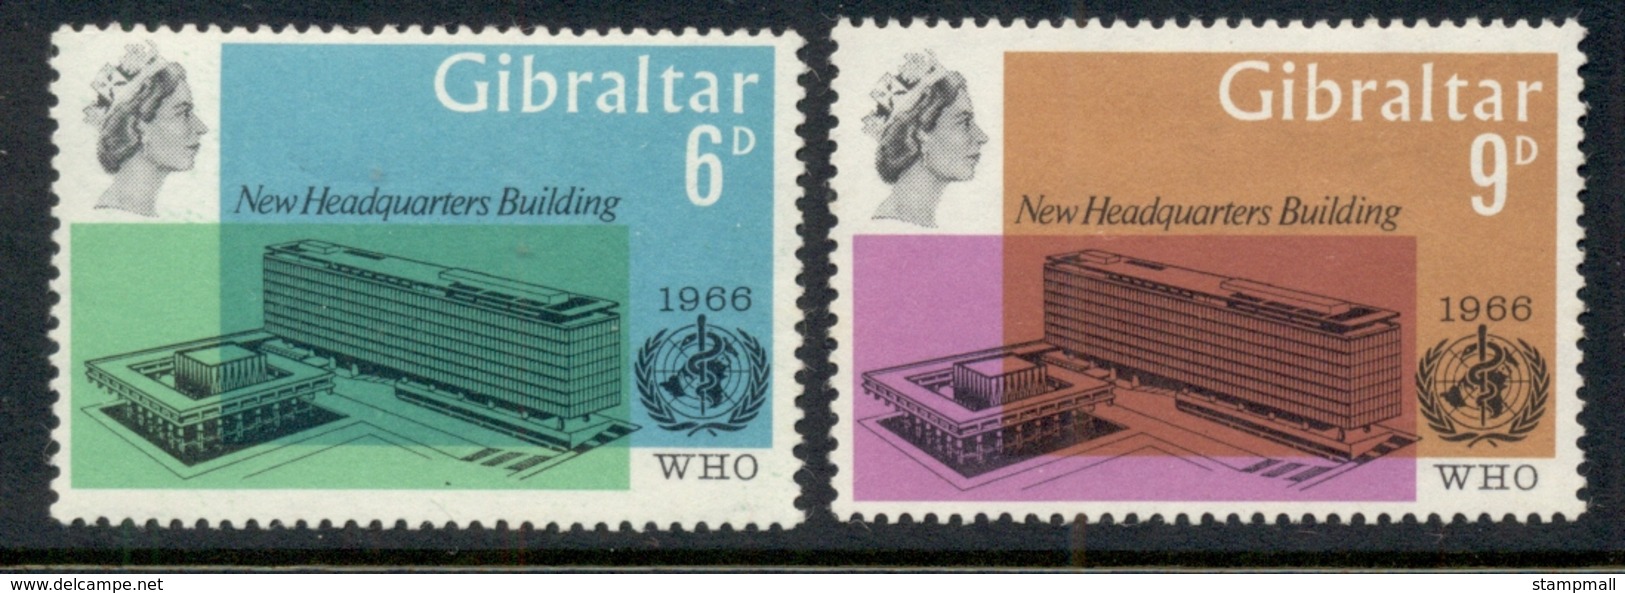 Gibraltar 1966 WHO Headquarters MUH - Gibraltar